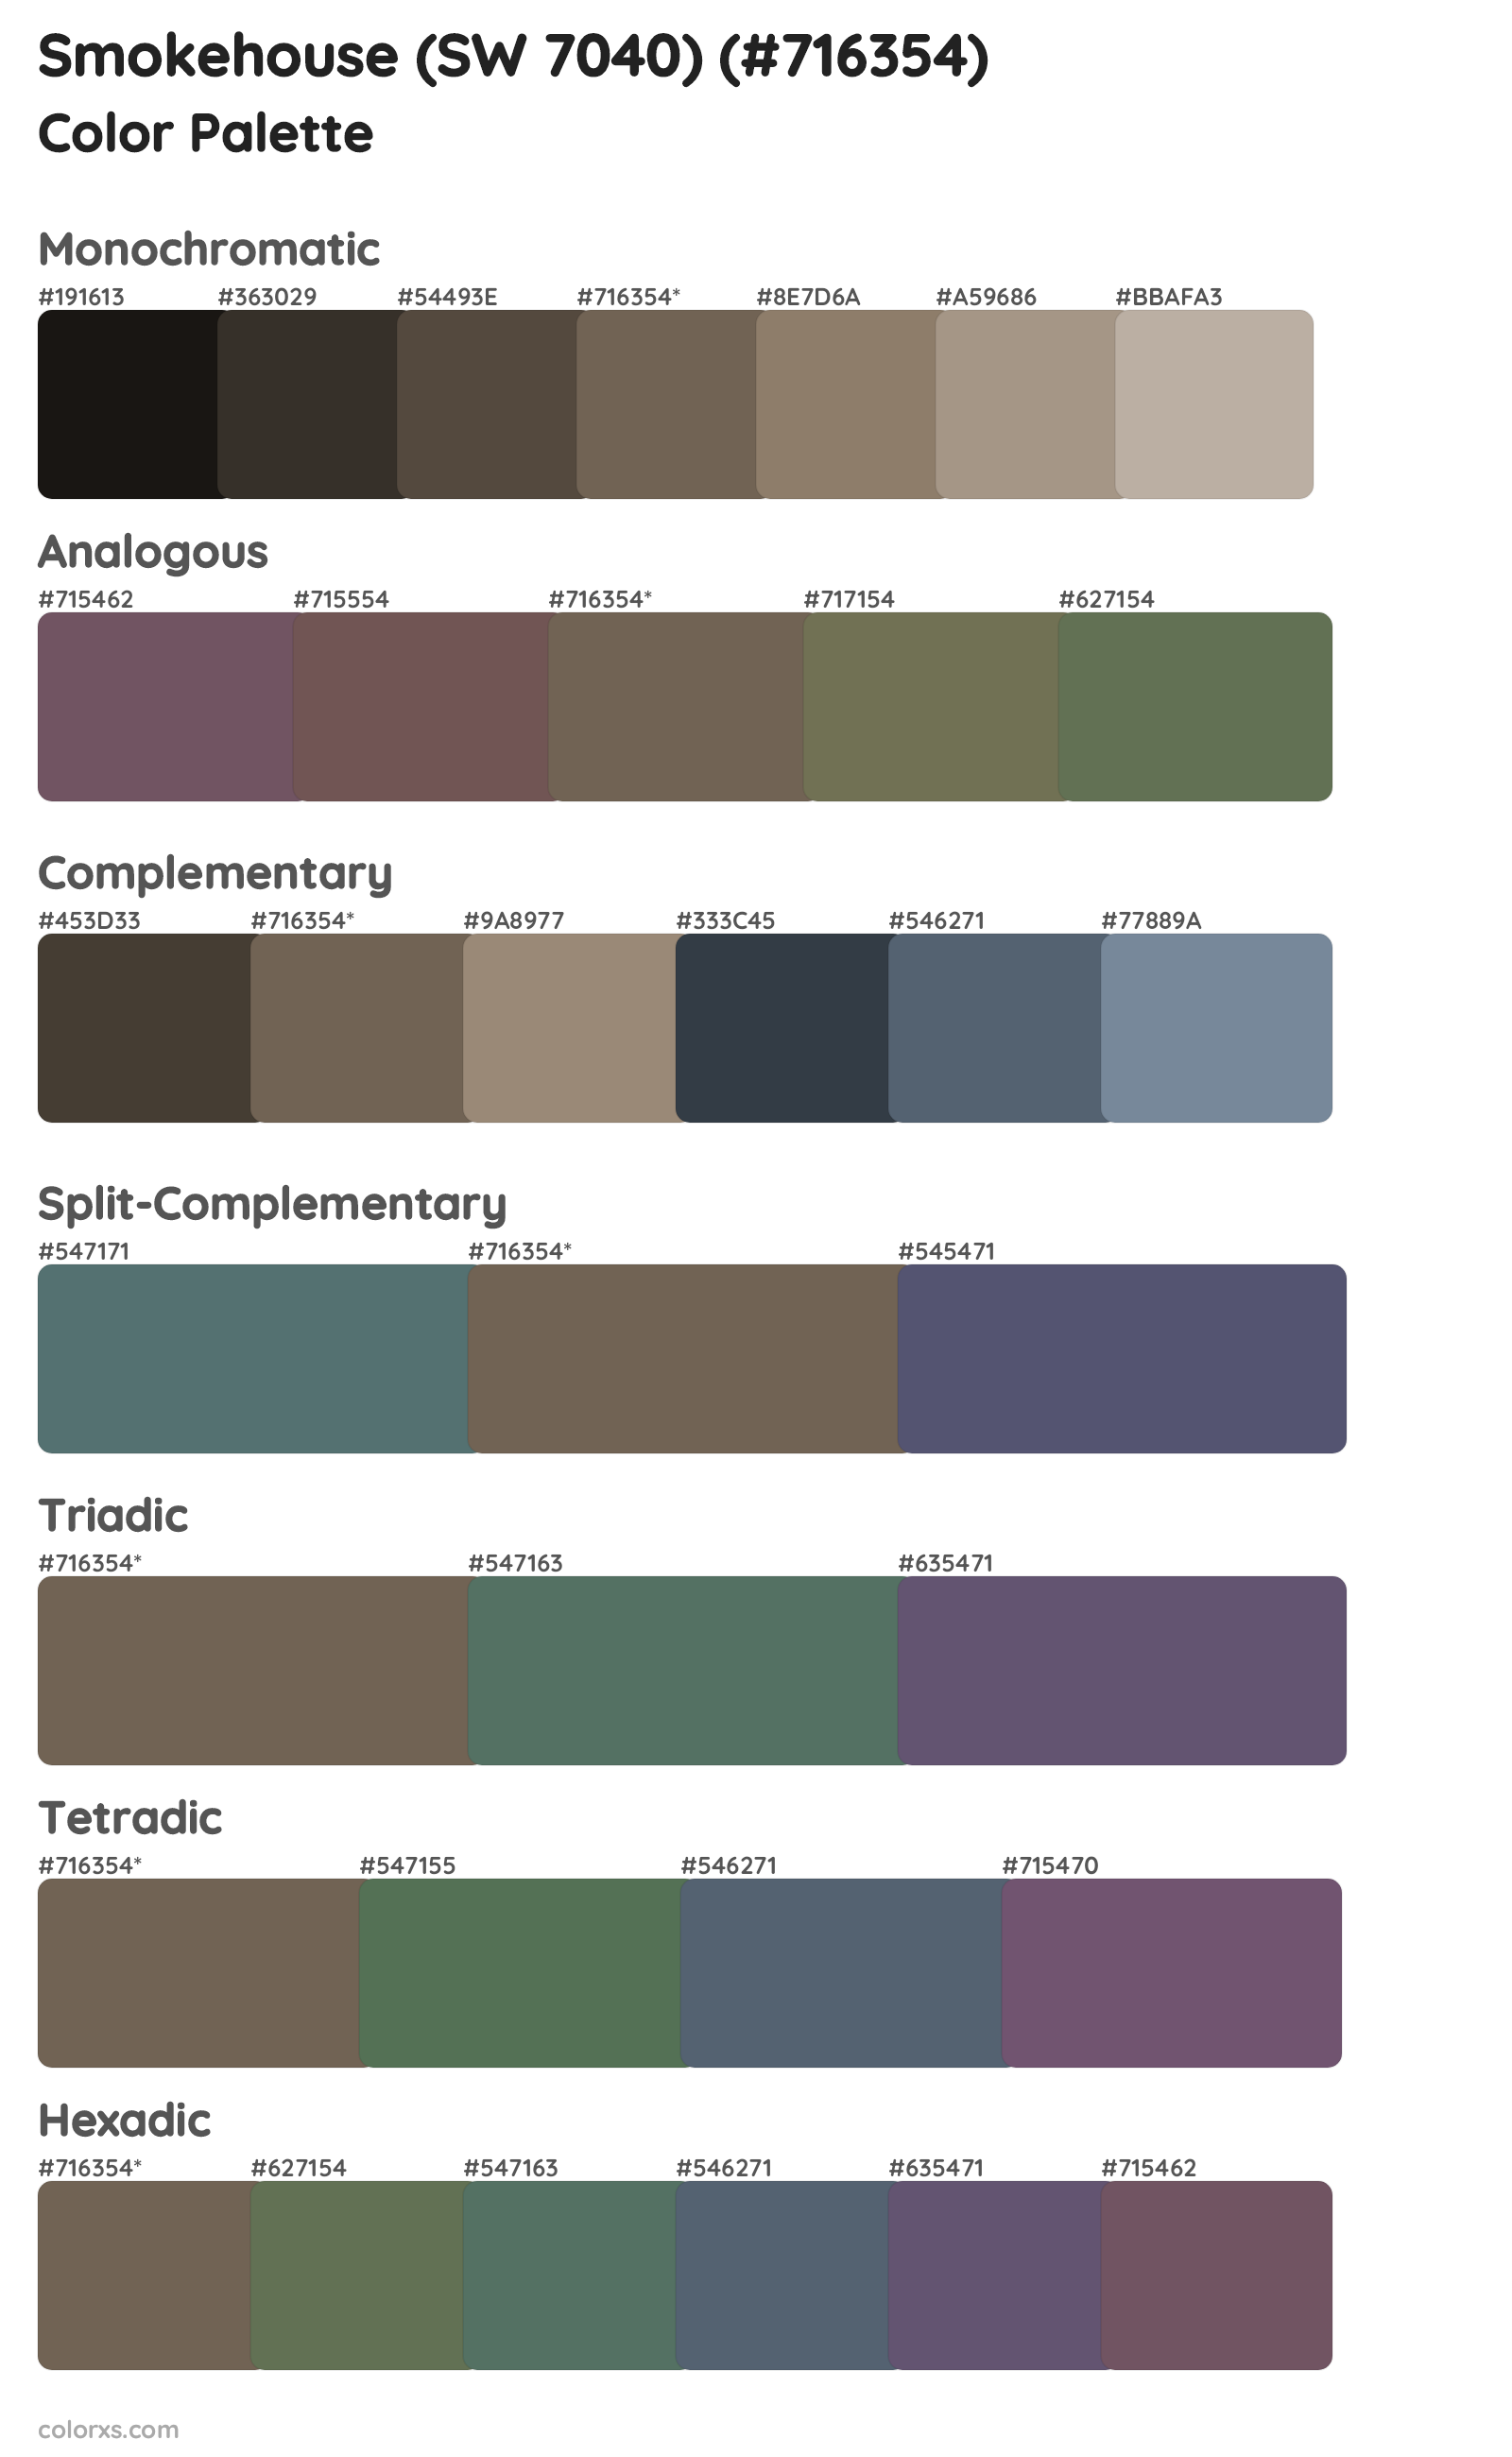 Smokehouse (SW 7040) Color Scheme Palettes